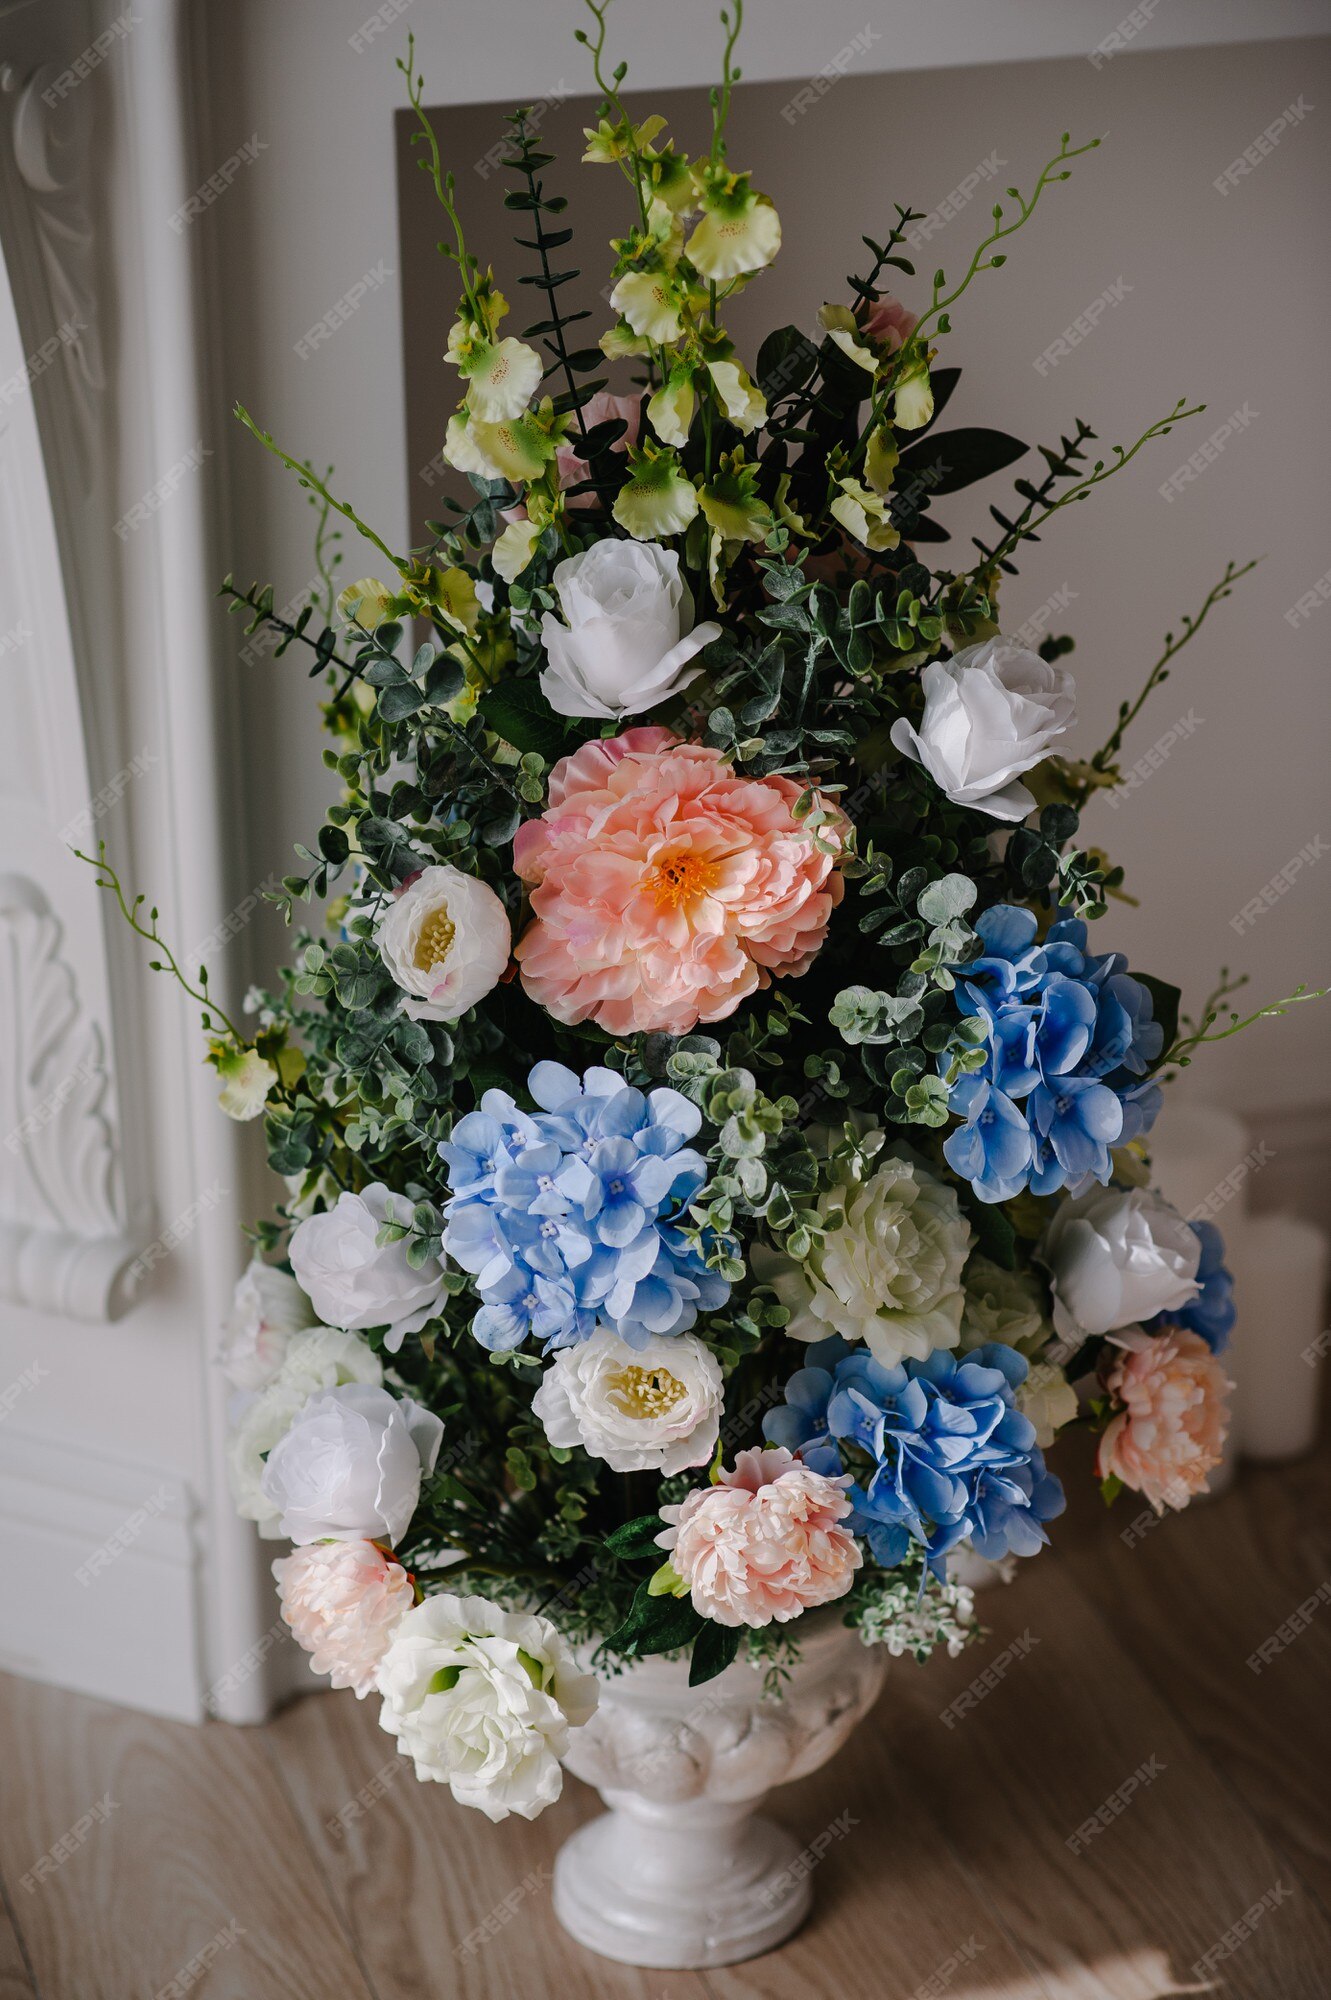 Premium Photo | Big bouquet of fresh flowers, pink, blue ...